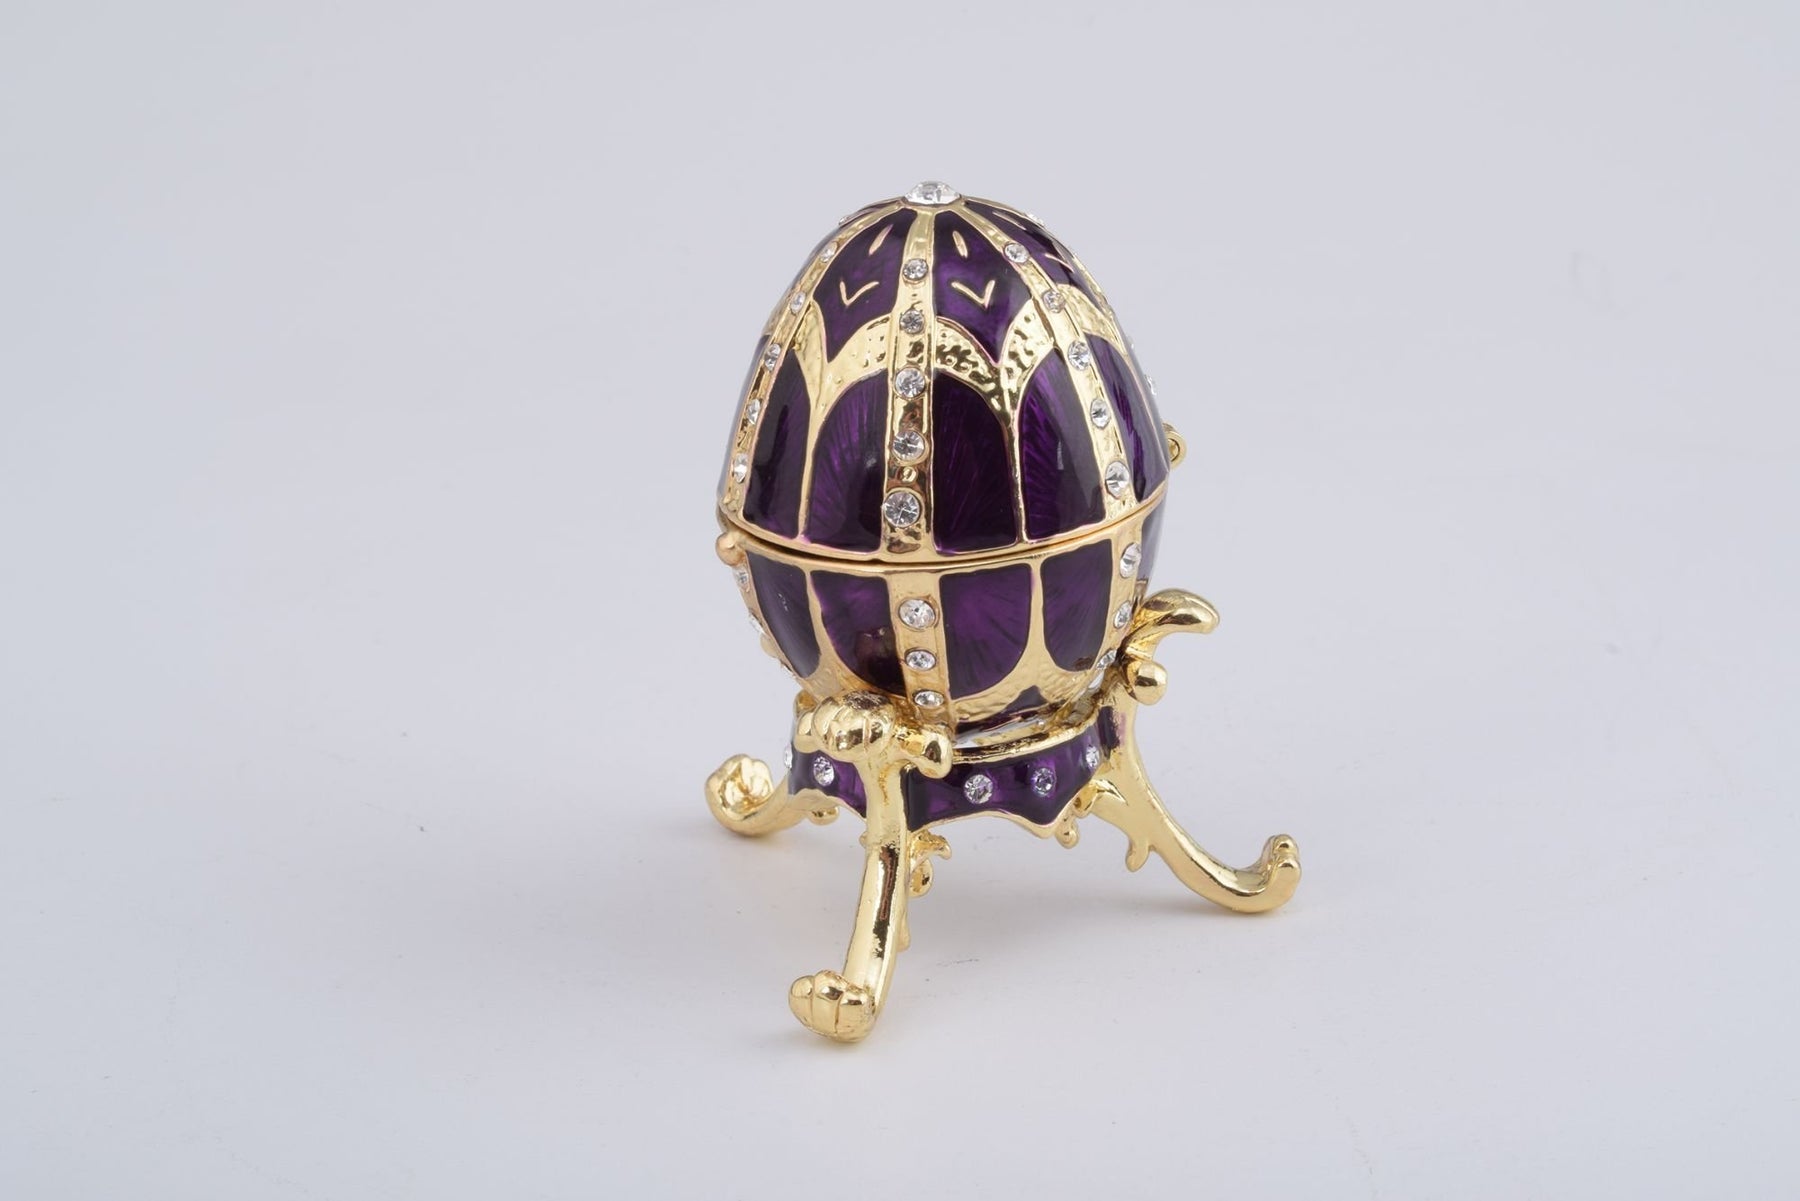 Keren Kopal Purple Faberge Style Egg with an Egg Pendant Inside  67.75